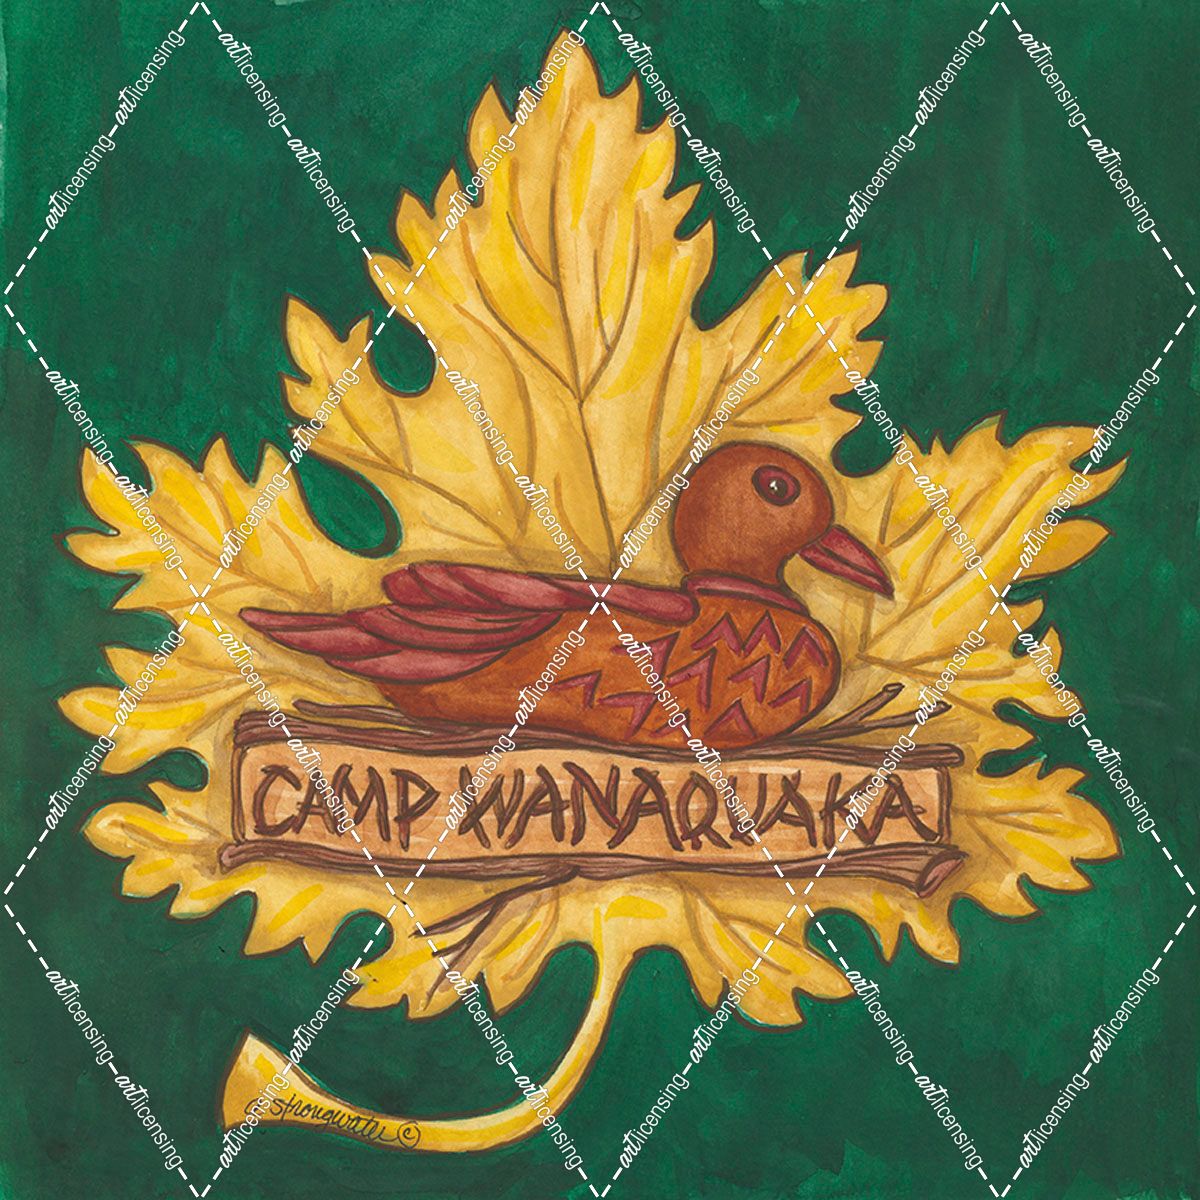 Adirondack Camp Wanaquaka